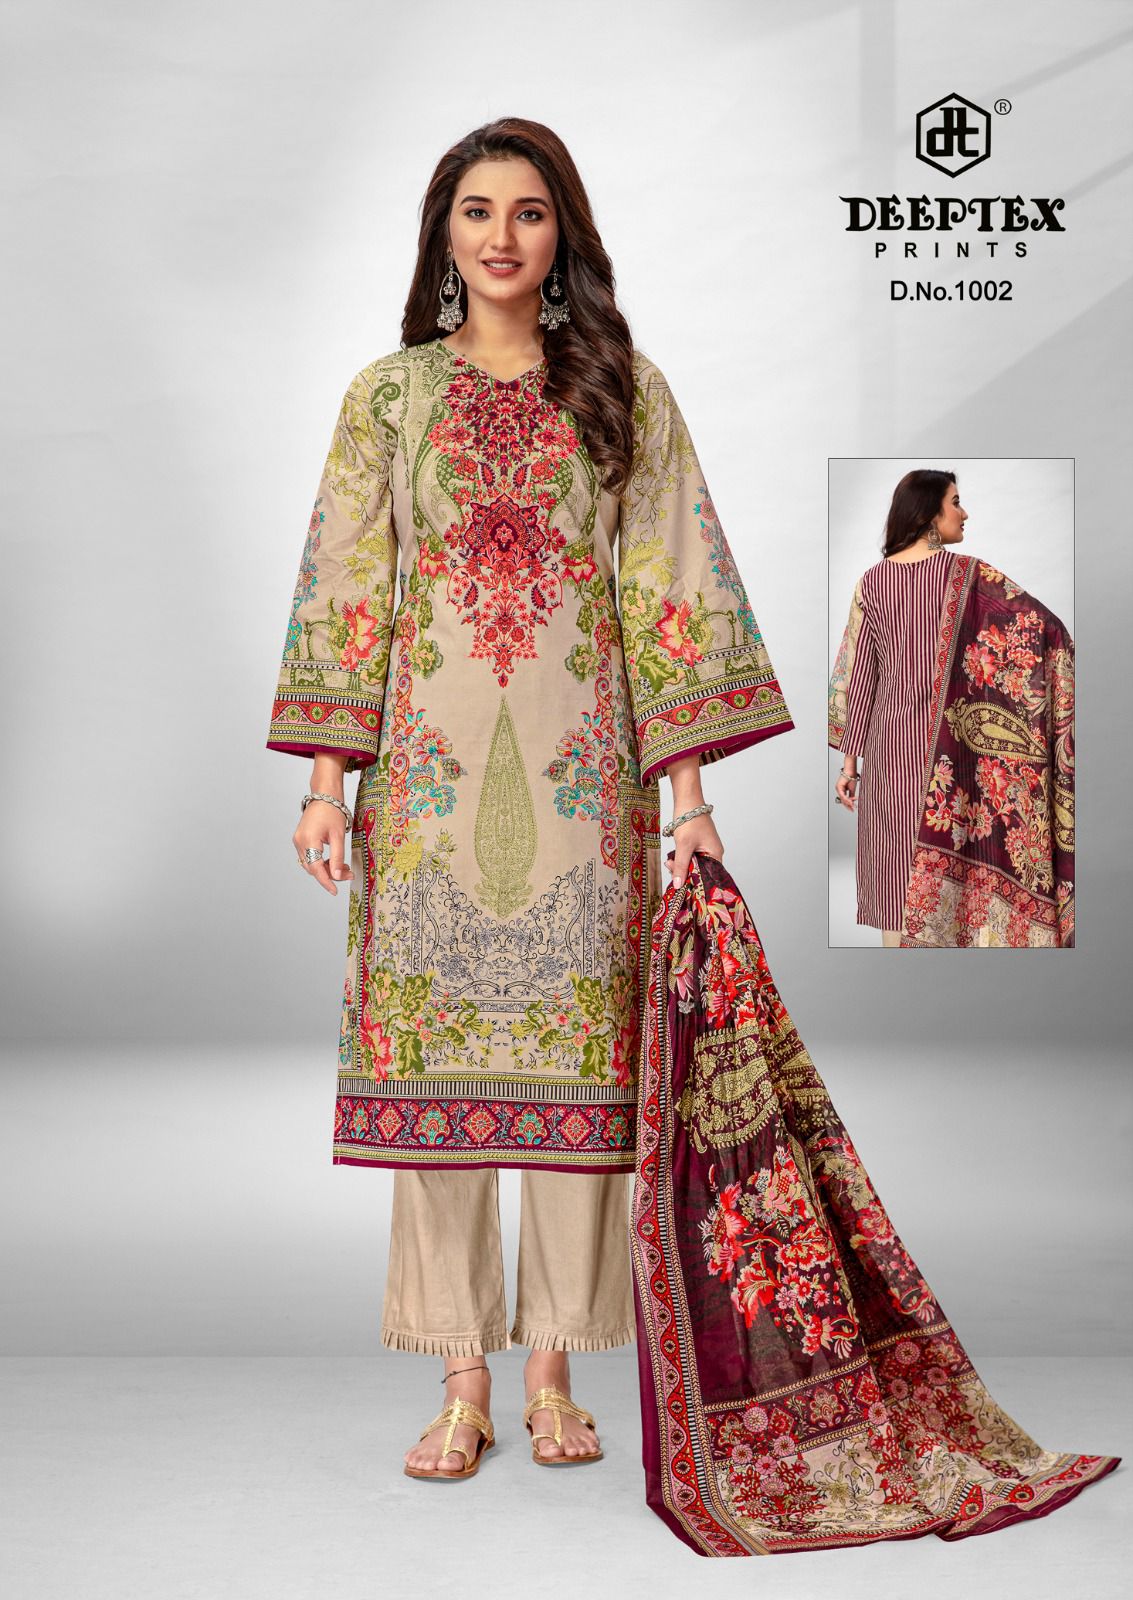 Roohi Zara Vol 1 Deeptex Prints Poplin Cotton Karachi Salwar Suits